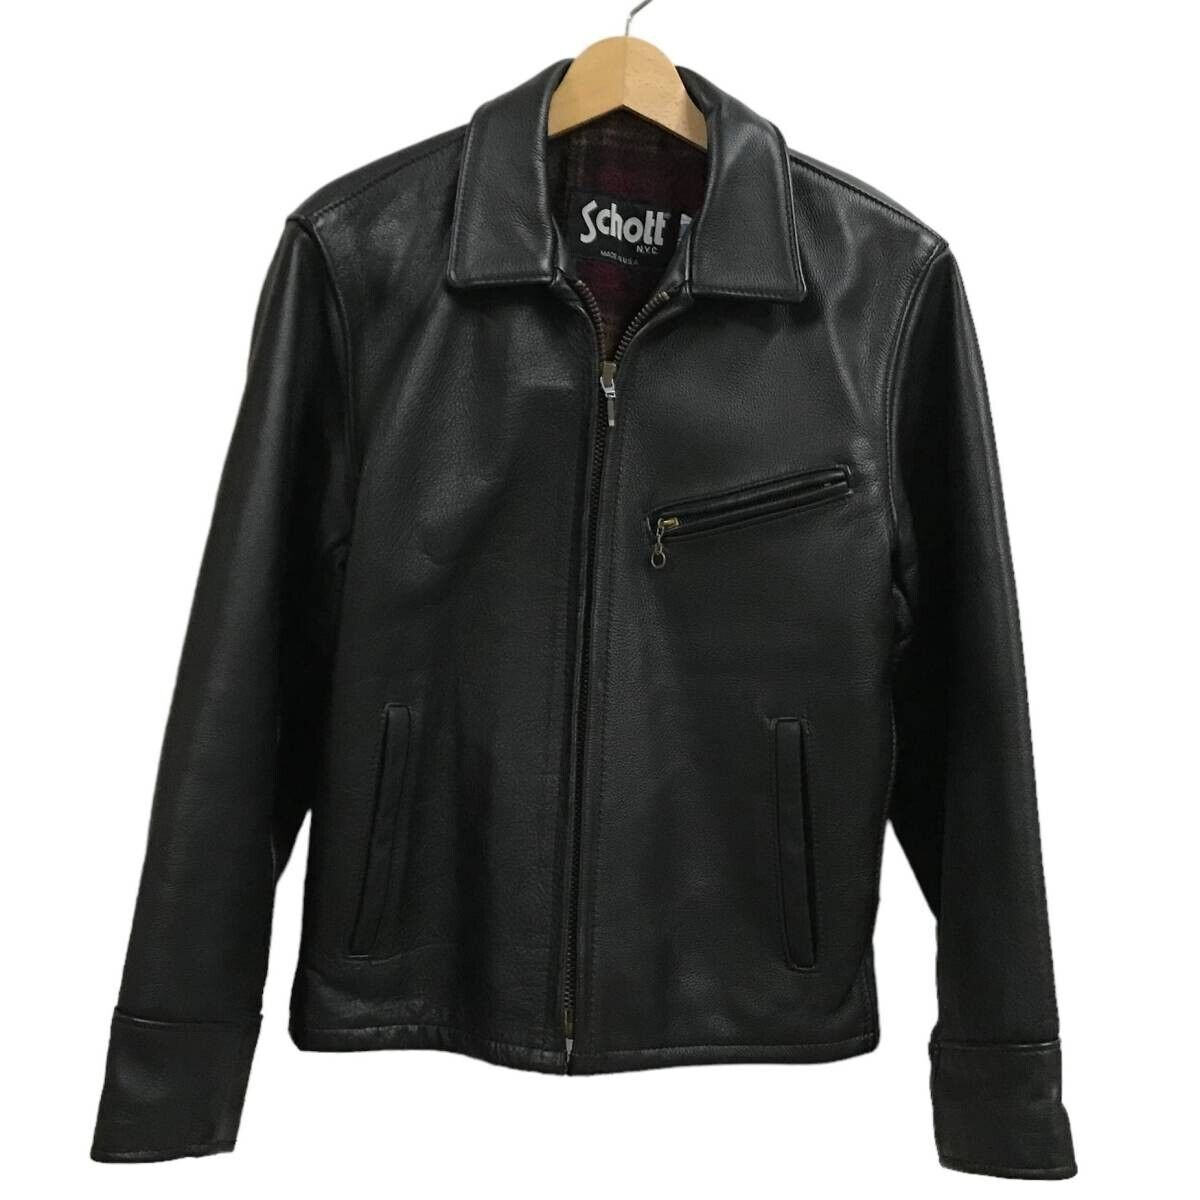 Schott PERFECTO leather motorcycle jacket USA 681 Black size 36 Vintage Japan